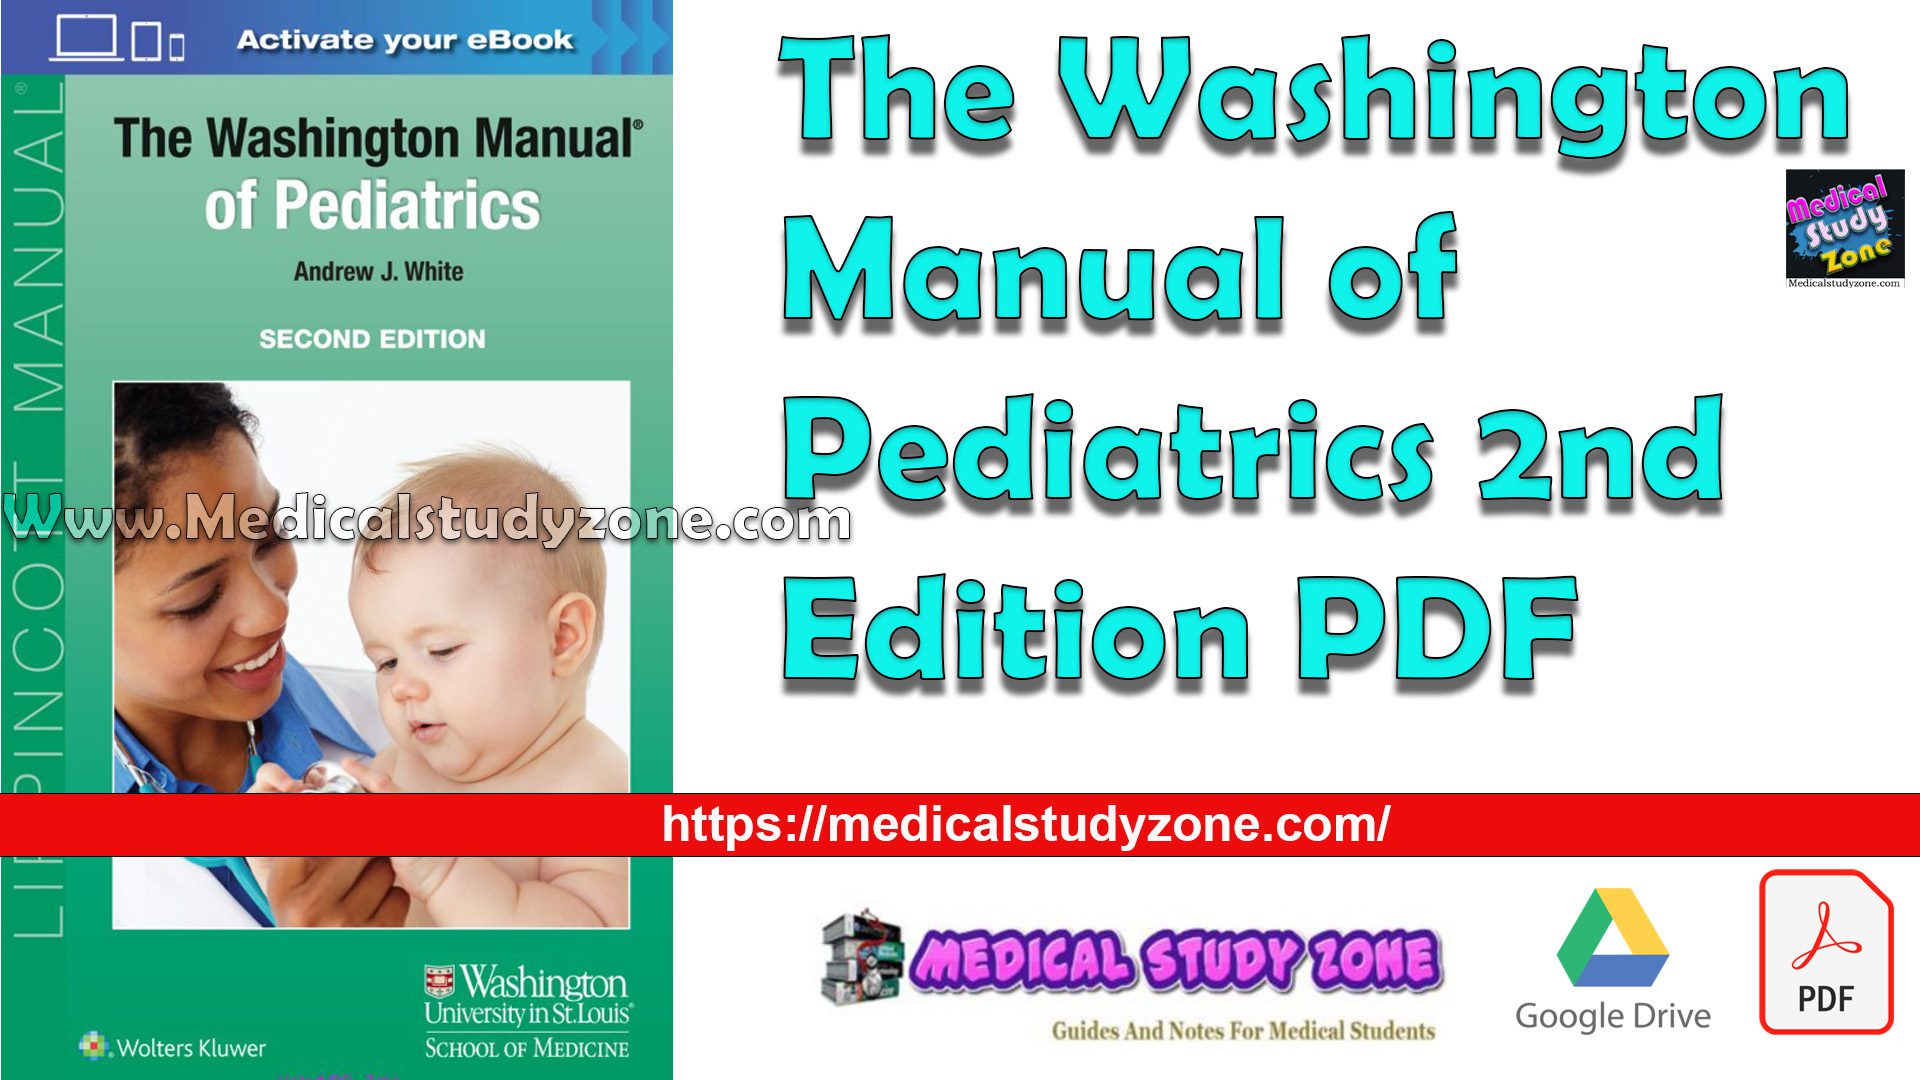 The Washington Manual of Pediatrics 2nd Edition PDF Free Download